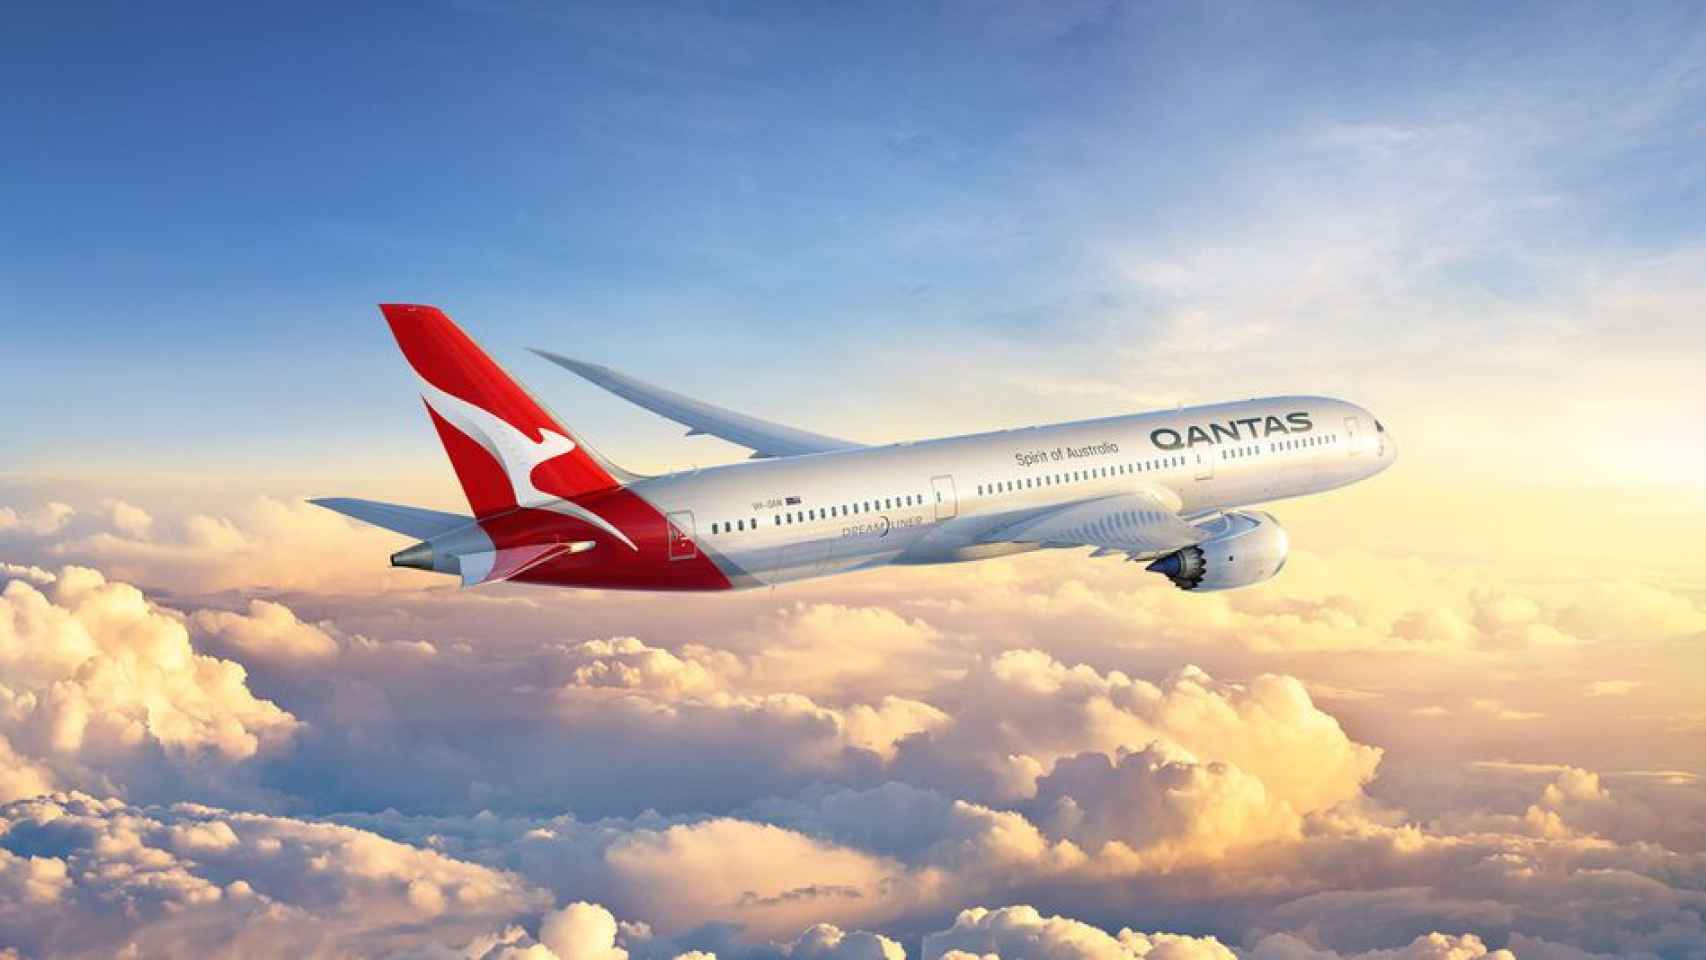 Un avión de la aerolínea australiana Qantas, en pleno vuelo / QANTAS